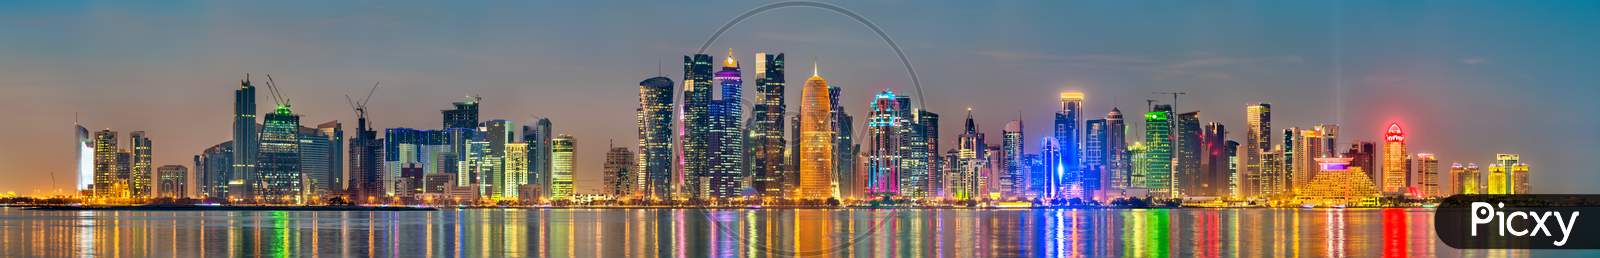 Skyline Of Doha At Sunset. The Capital Of Qatar